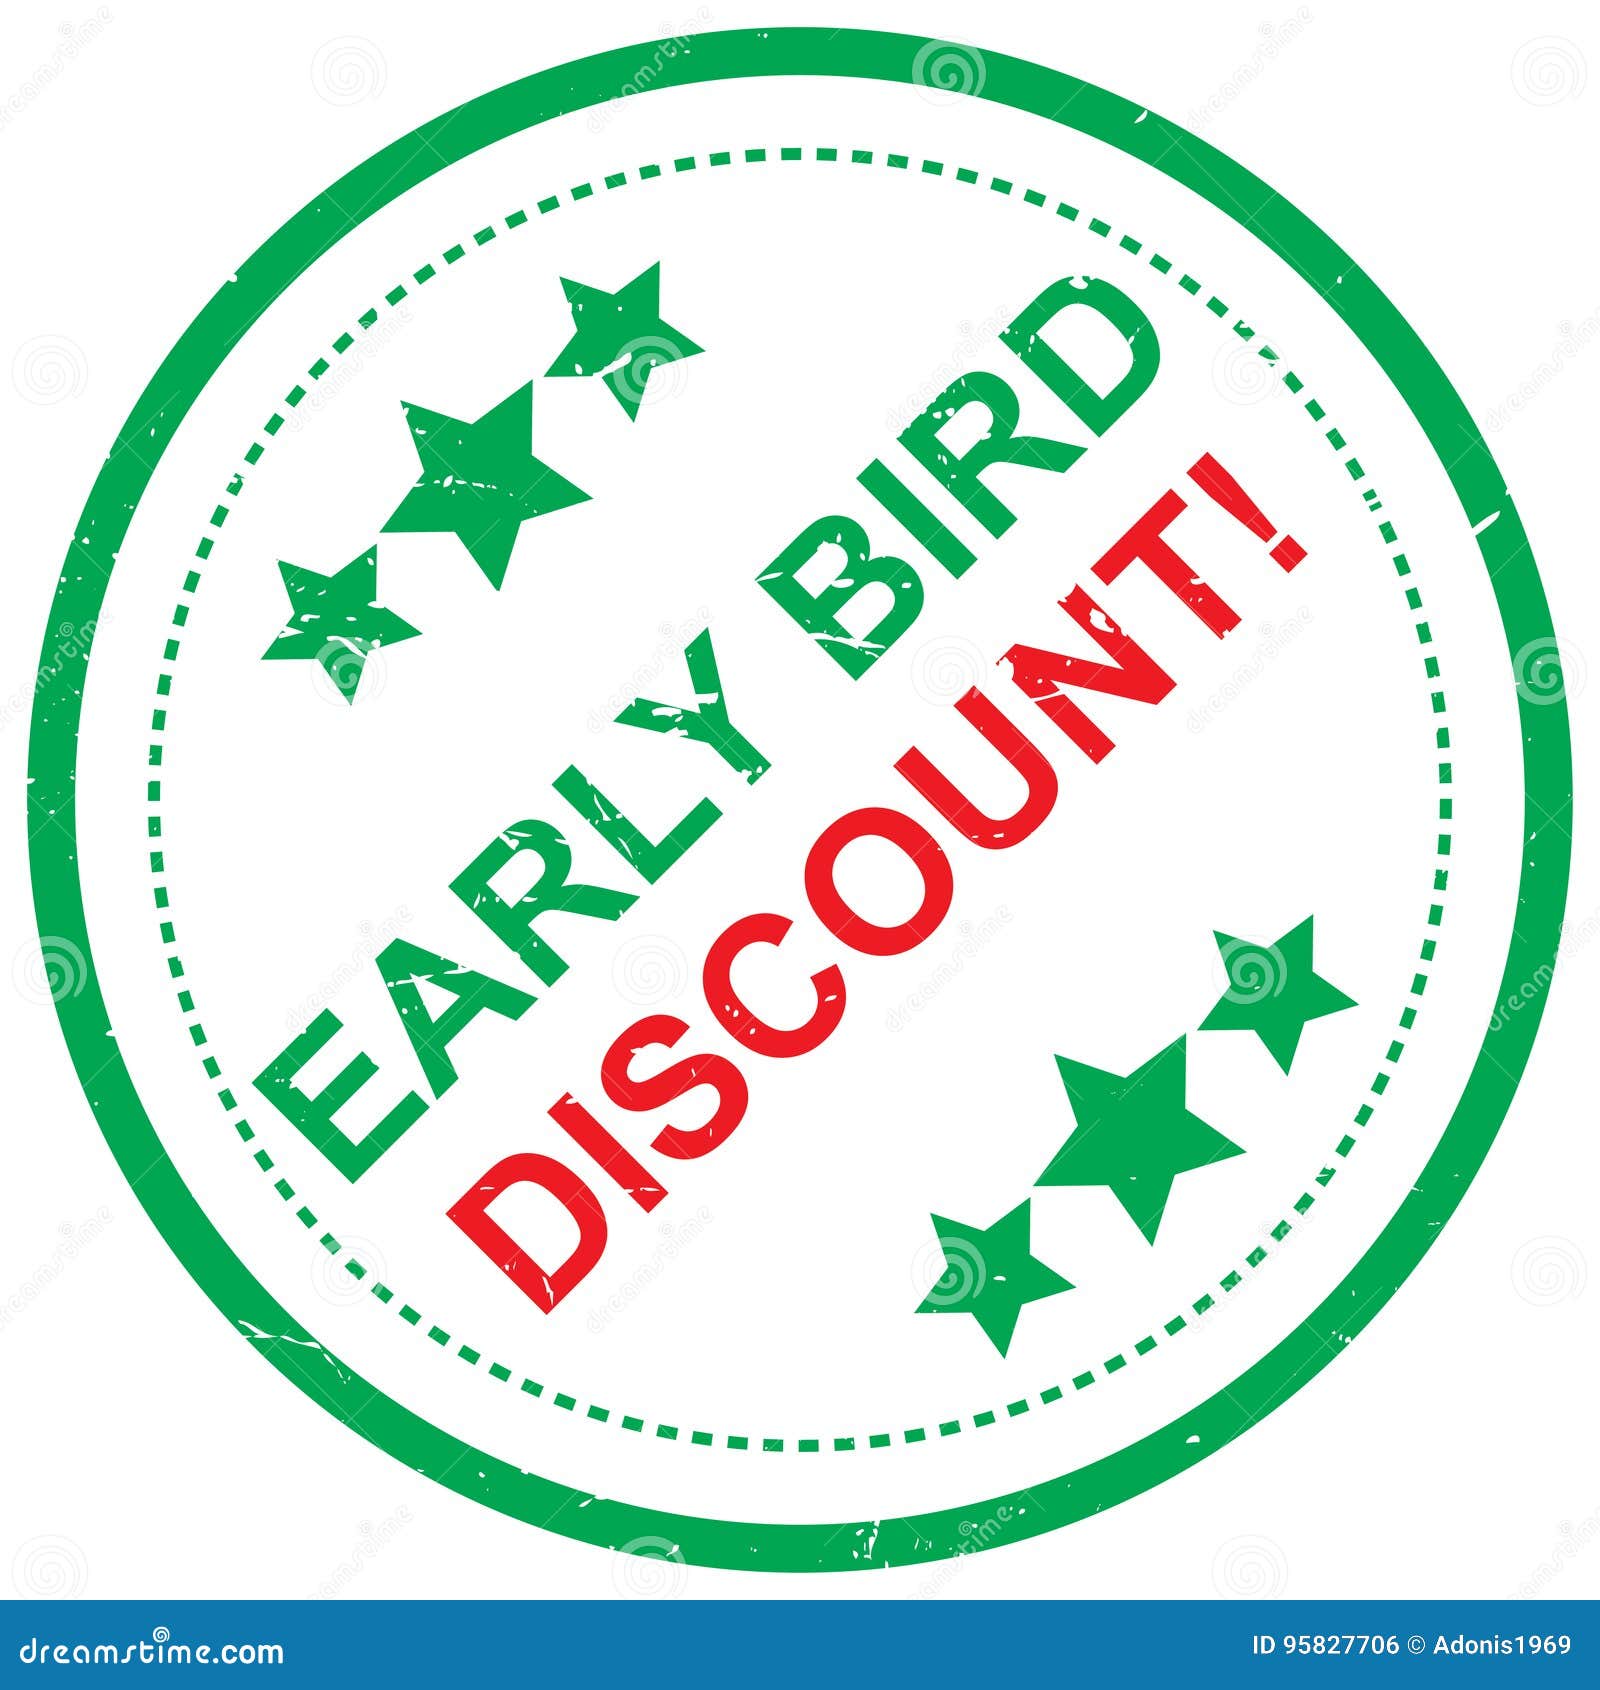 early bird discount